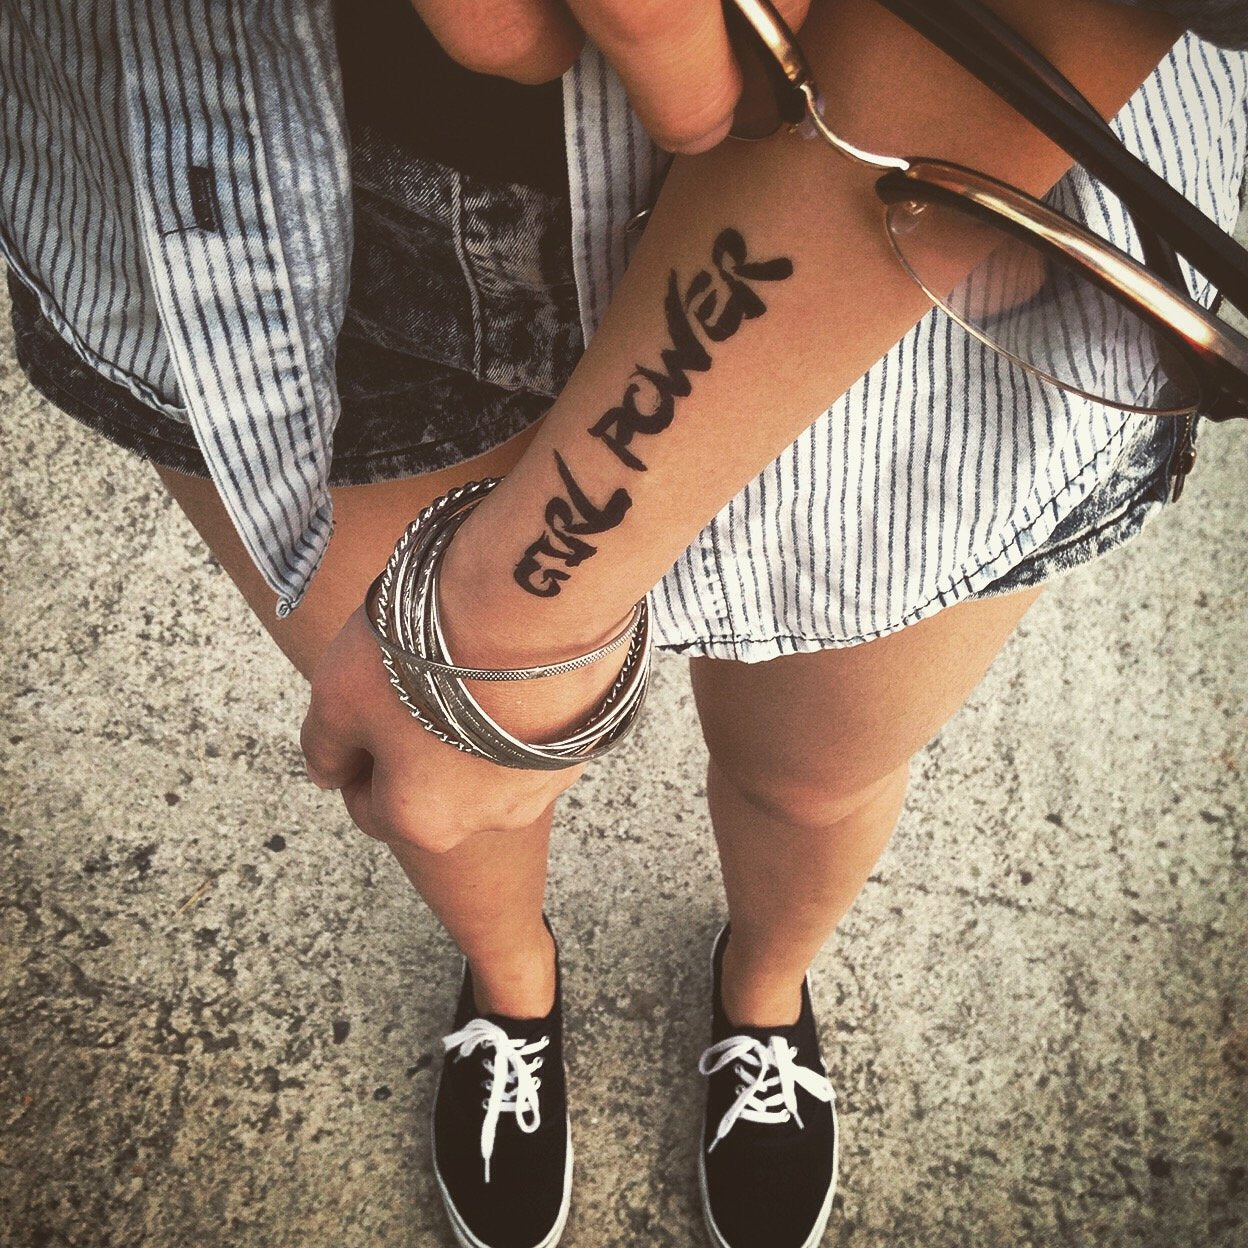 fake medium girl power lettering temporary tattoo sticker design idea on forearm